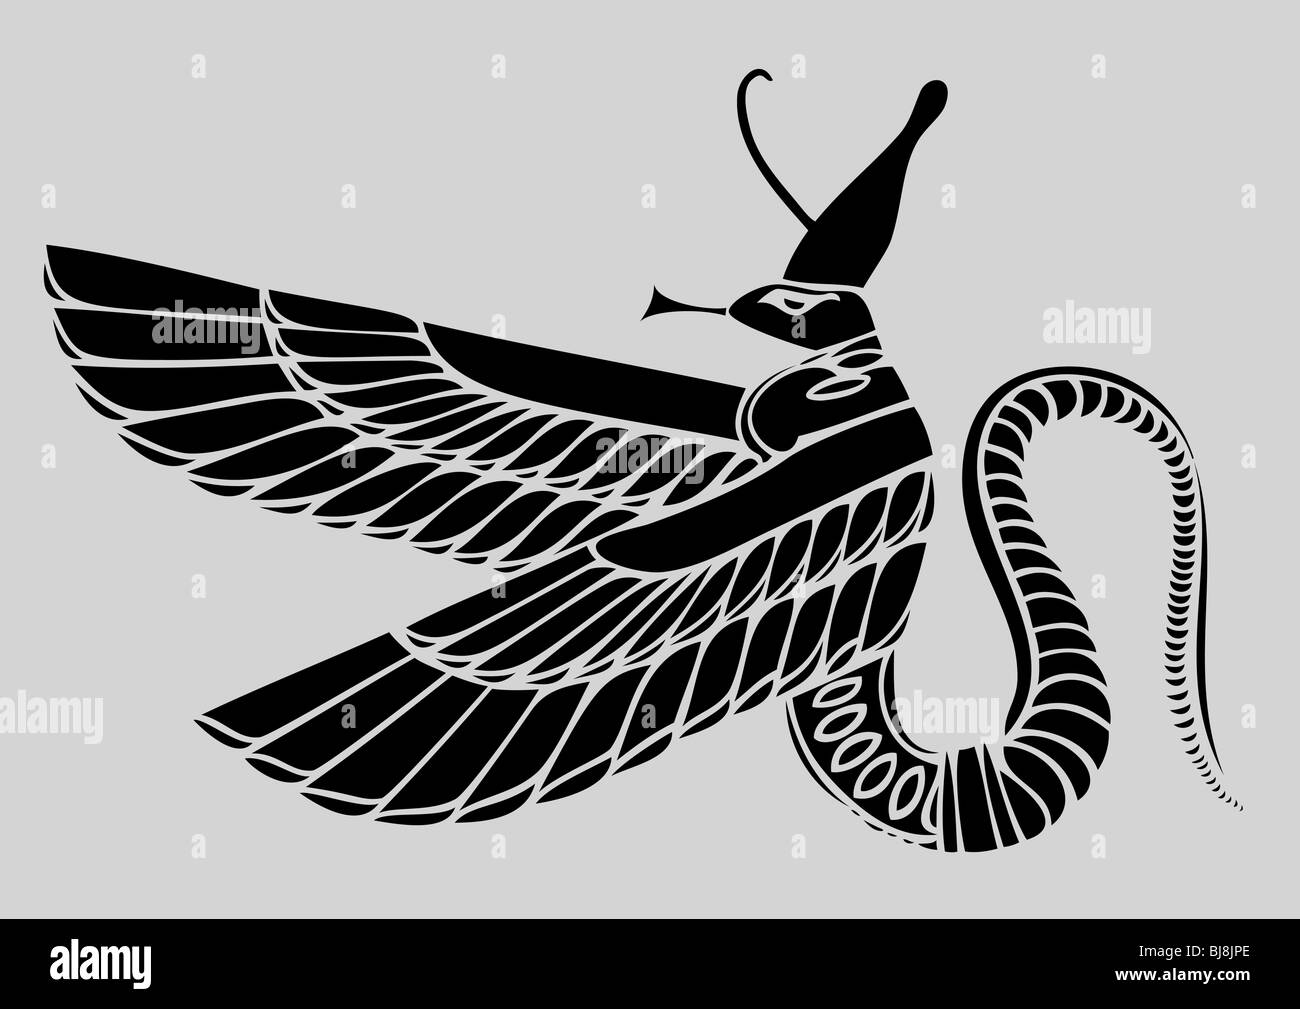 Image of the Egyptian demon - dragon Stock Photo